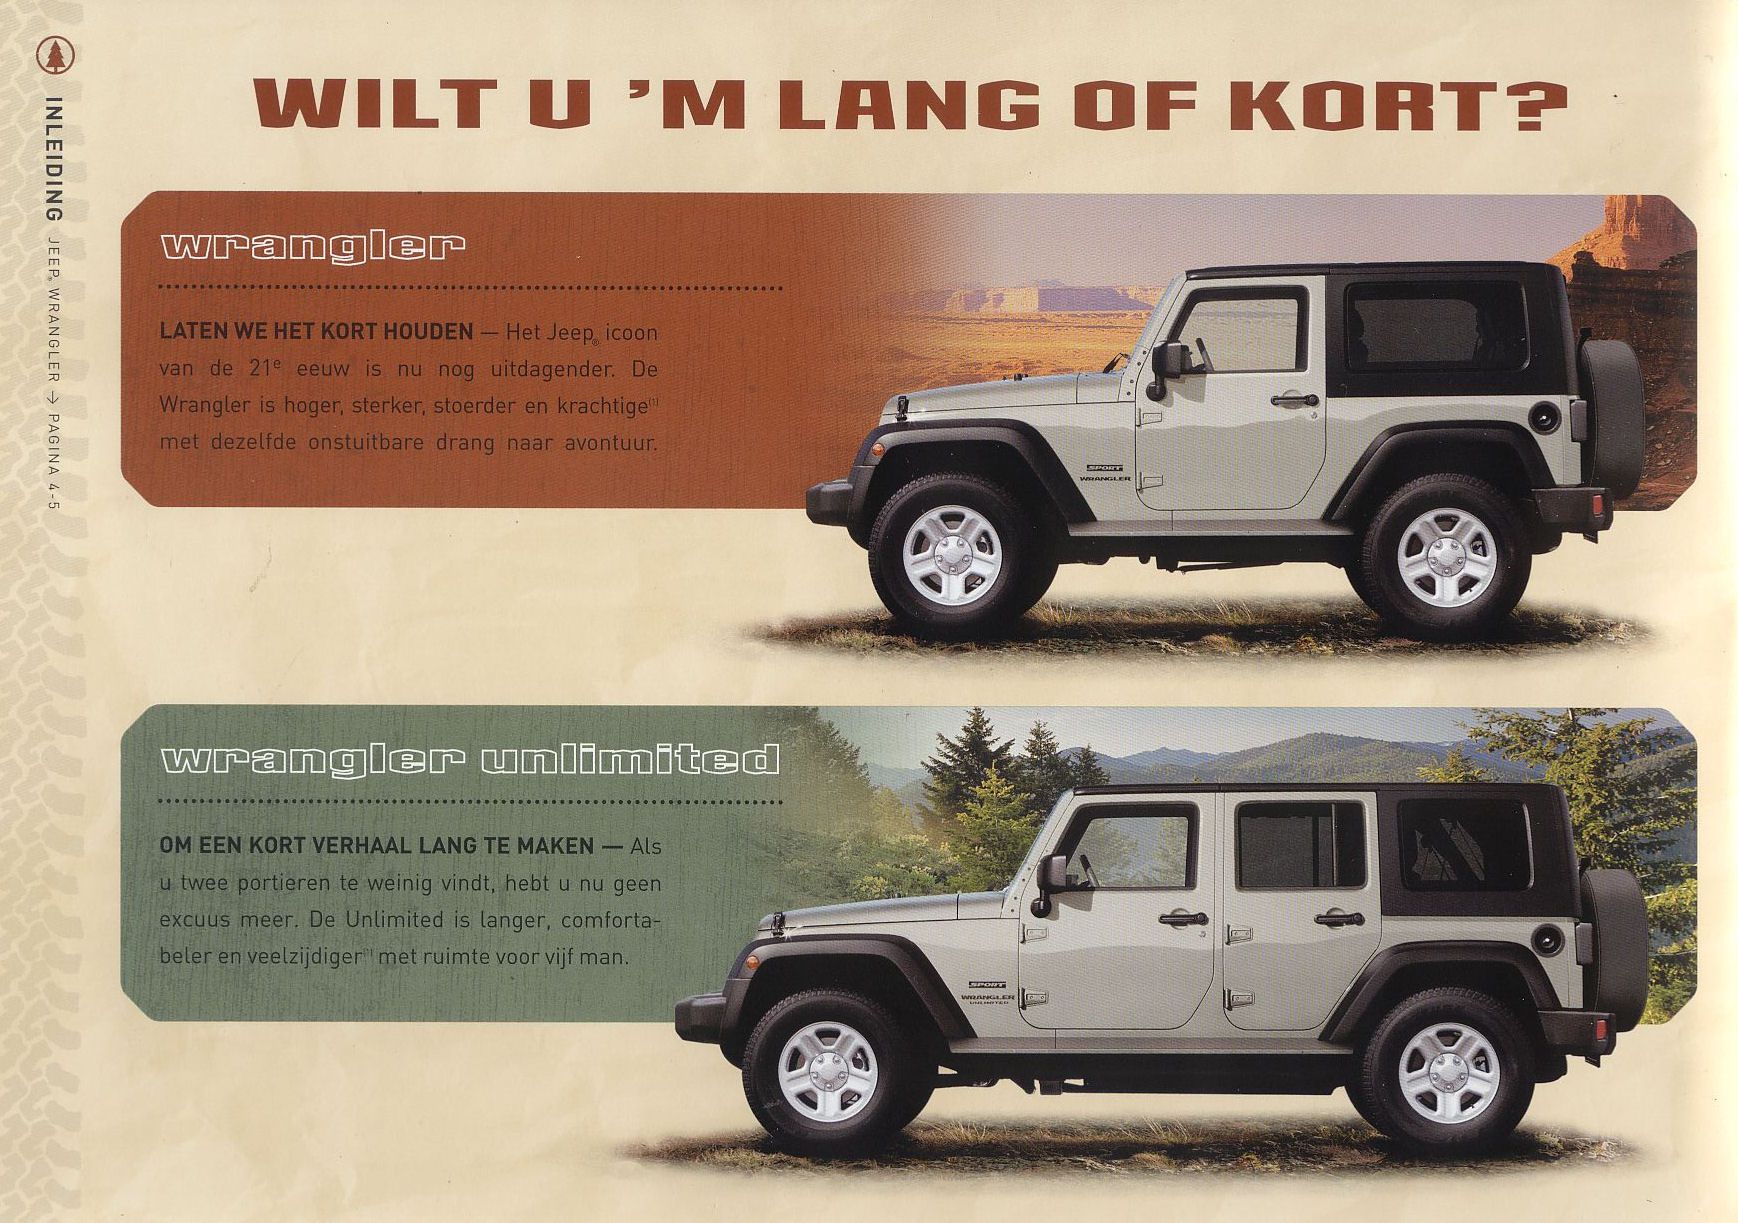 2006 Jeep Wrangler brochure